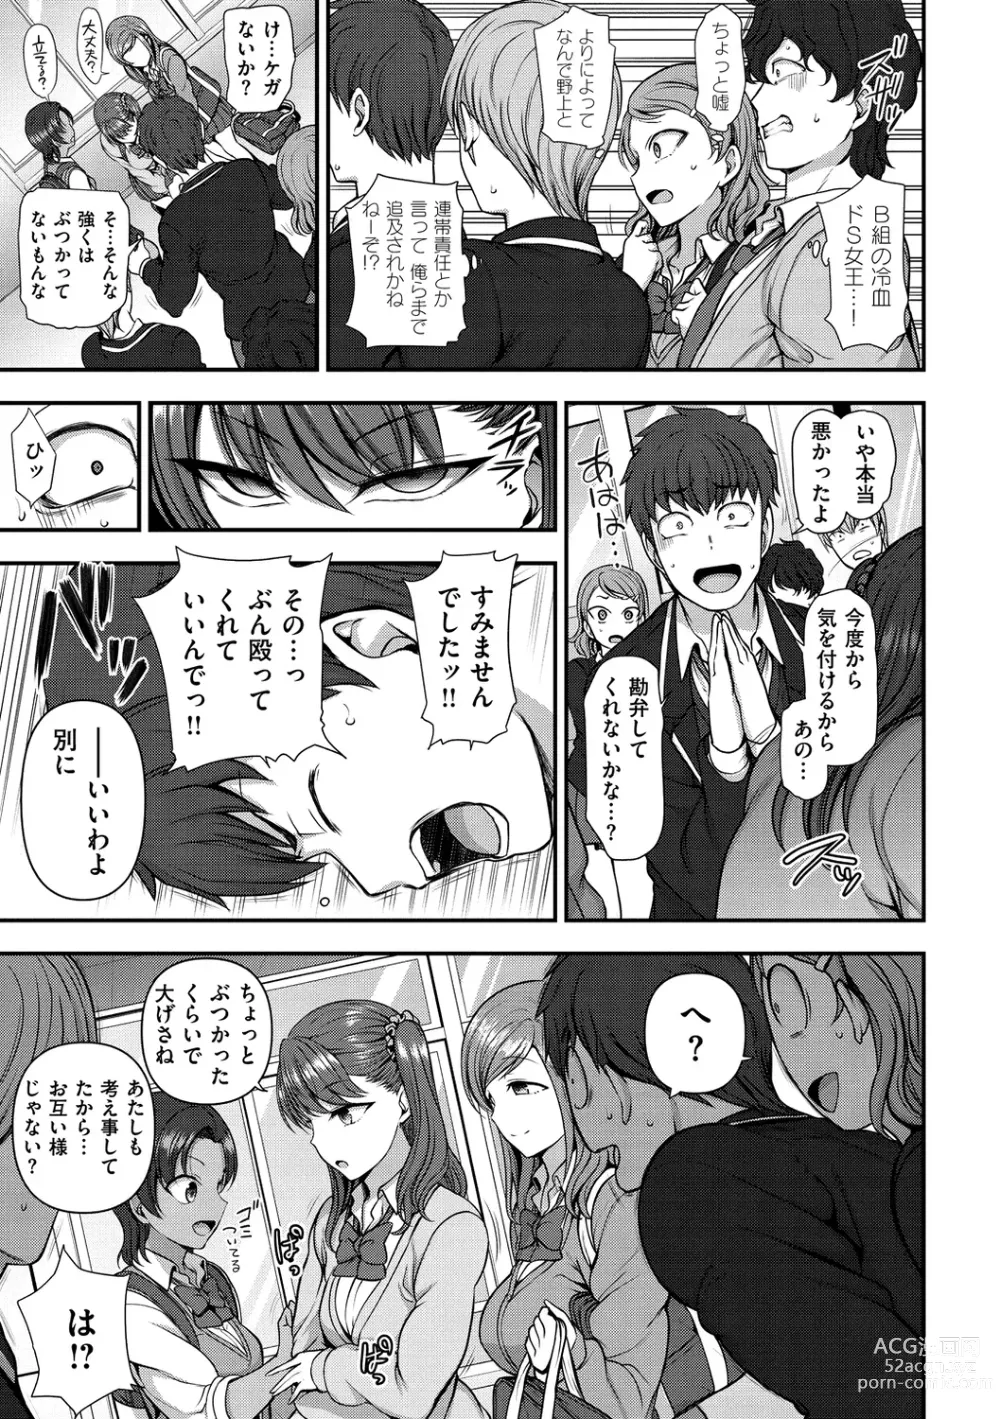 Page 223 of manga Ijirare